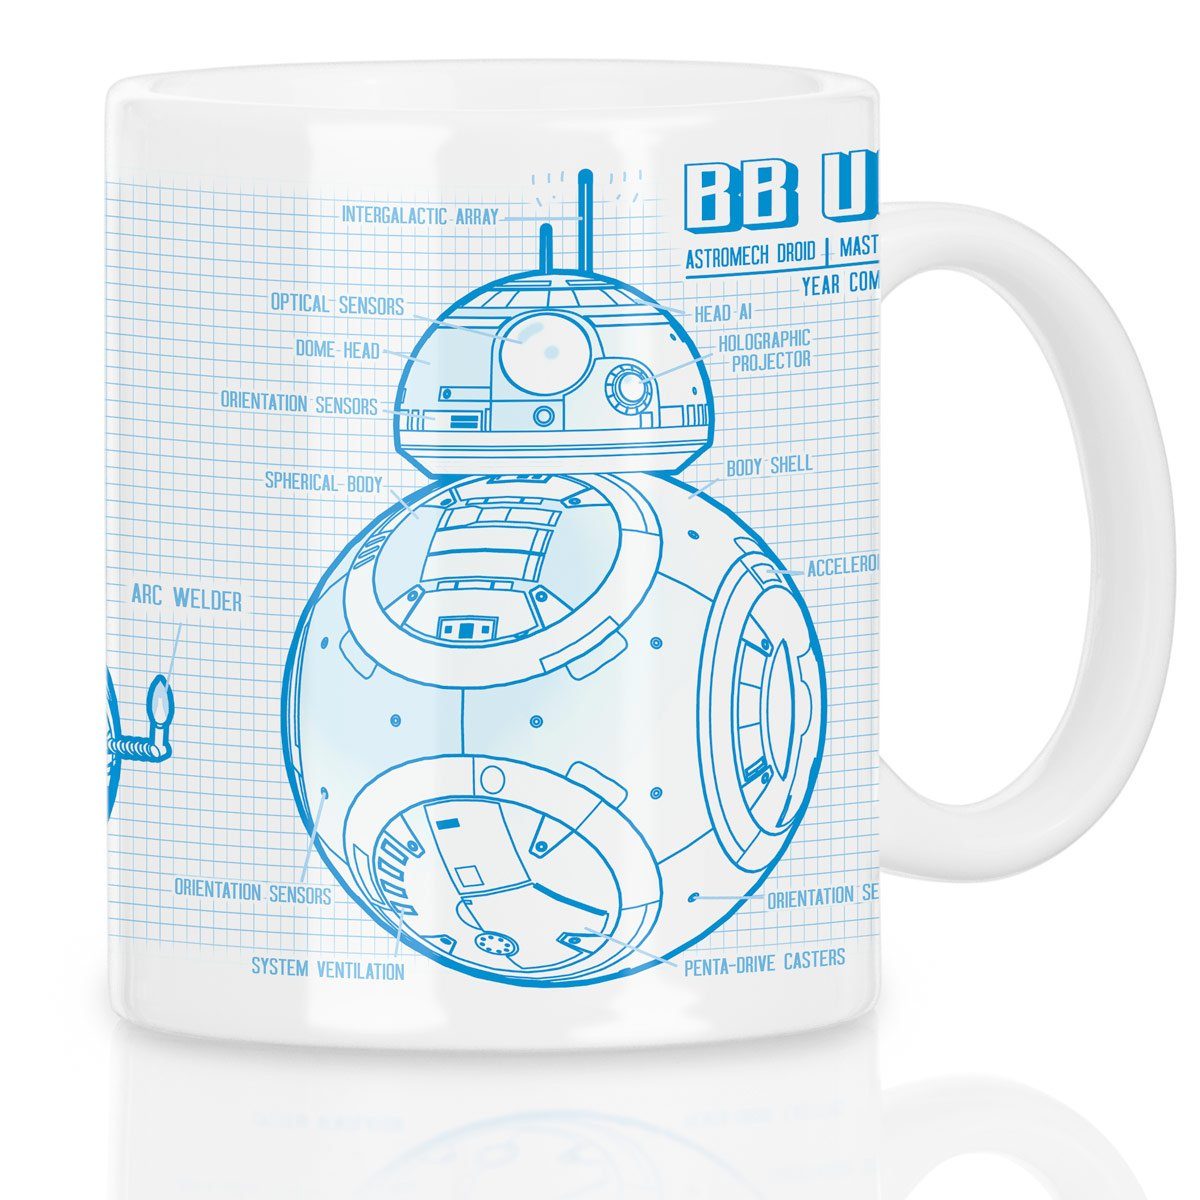 Keramik, krieg droide droide blaupause star BB-8 Tasse der roboter style3 sphero Tasse, kugel sterne Kaffeebecher wars